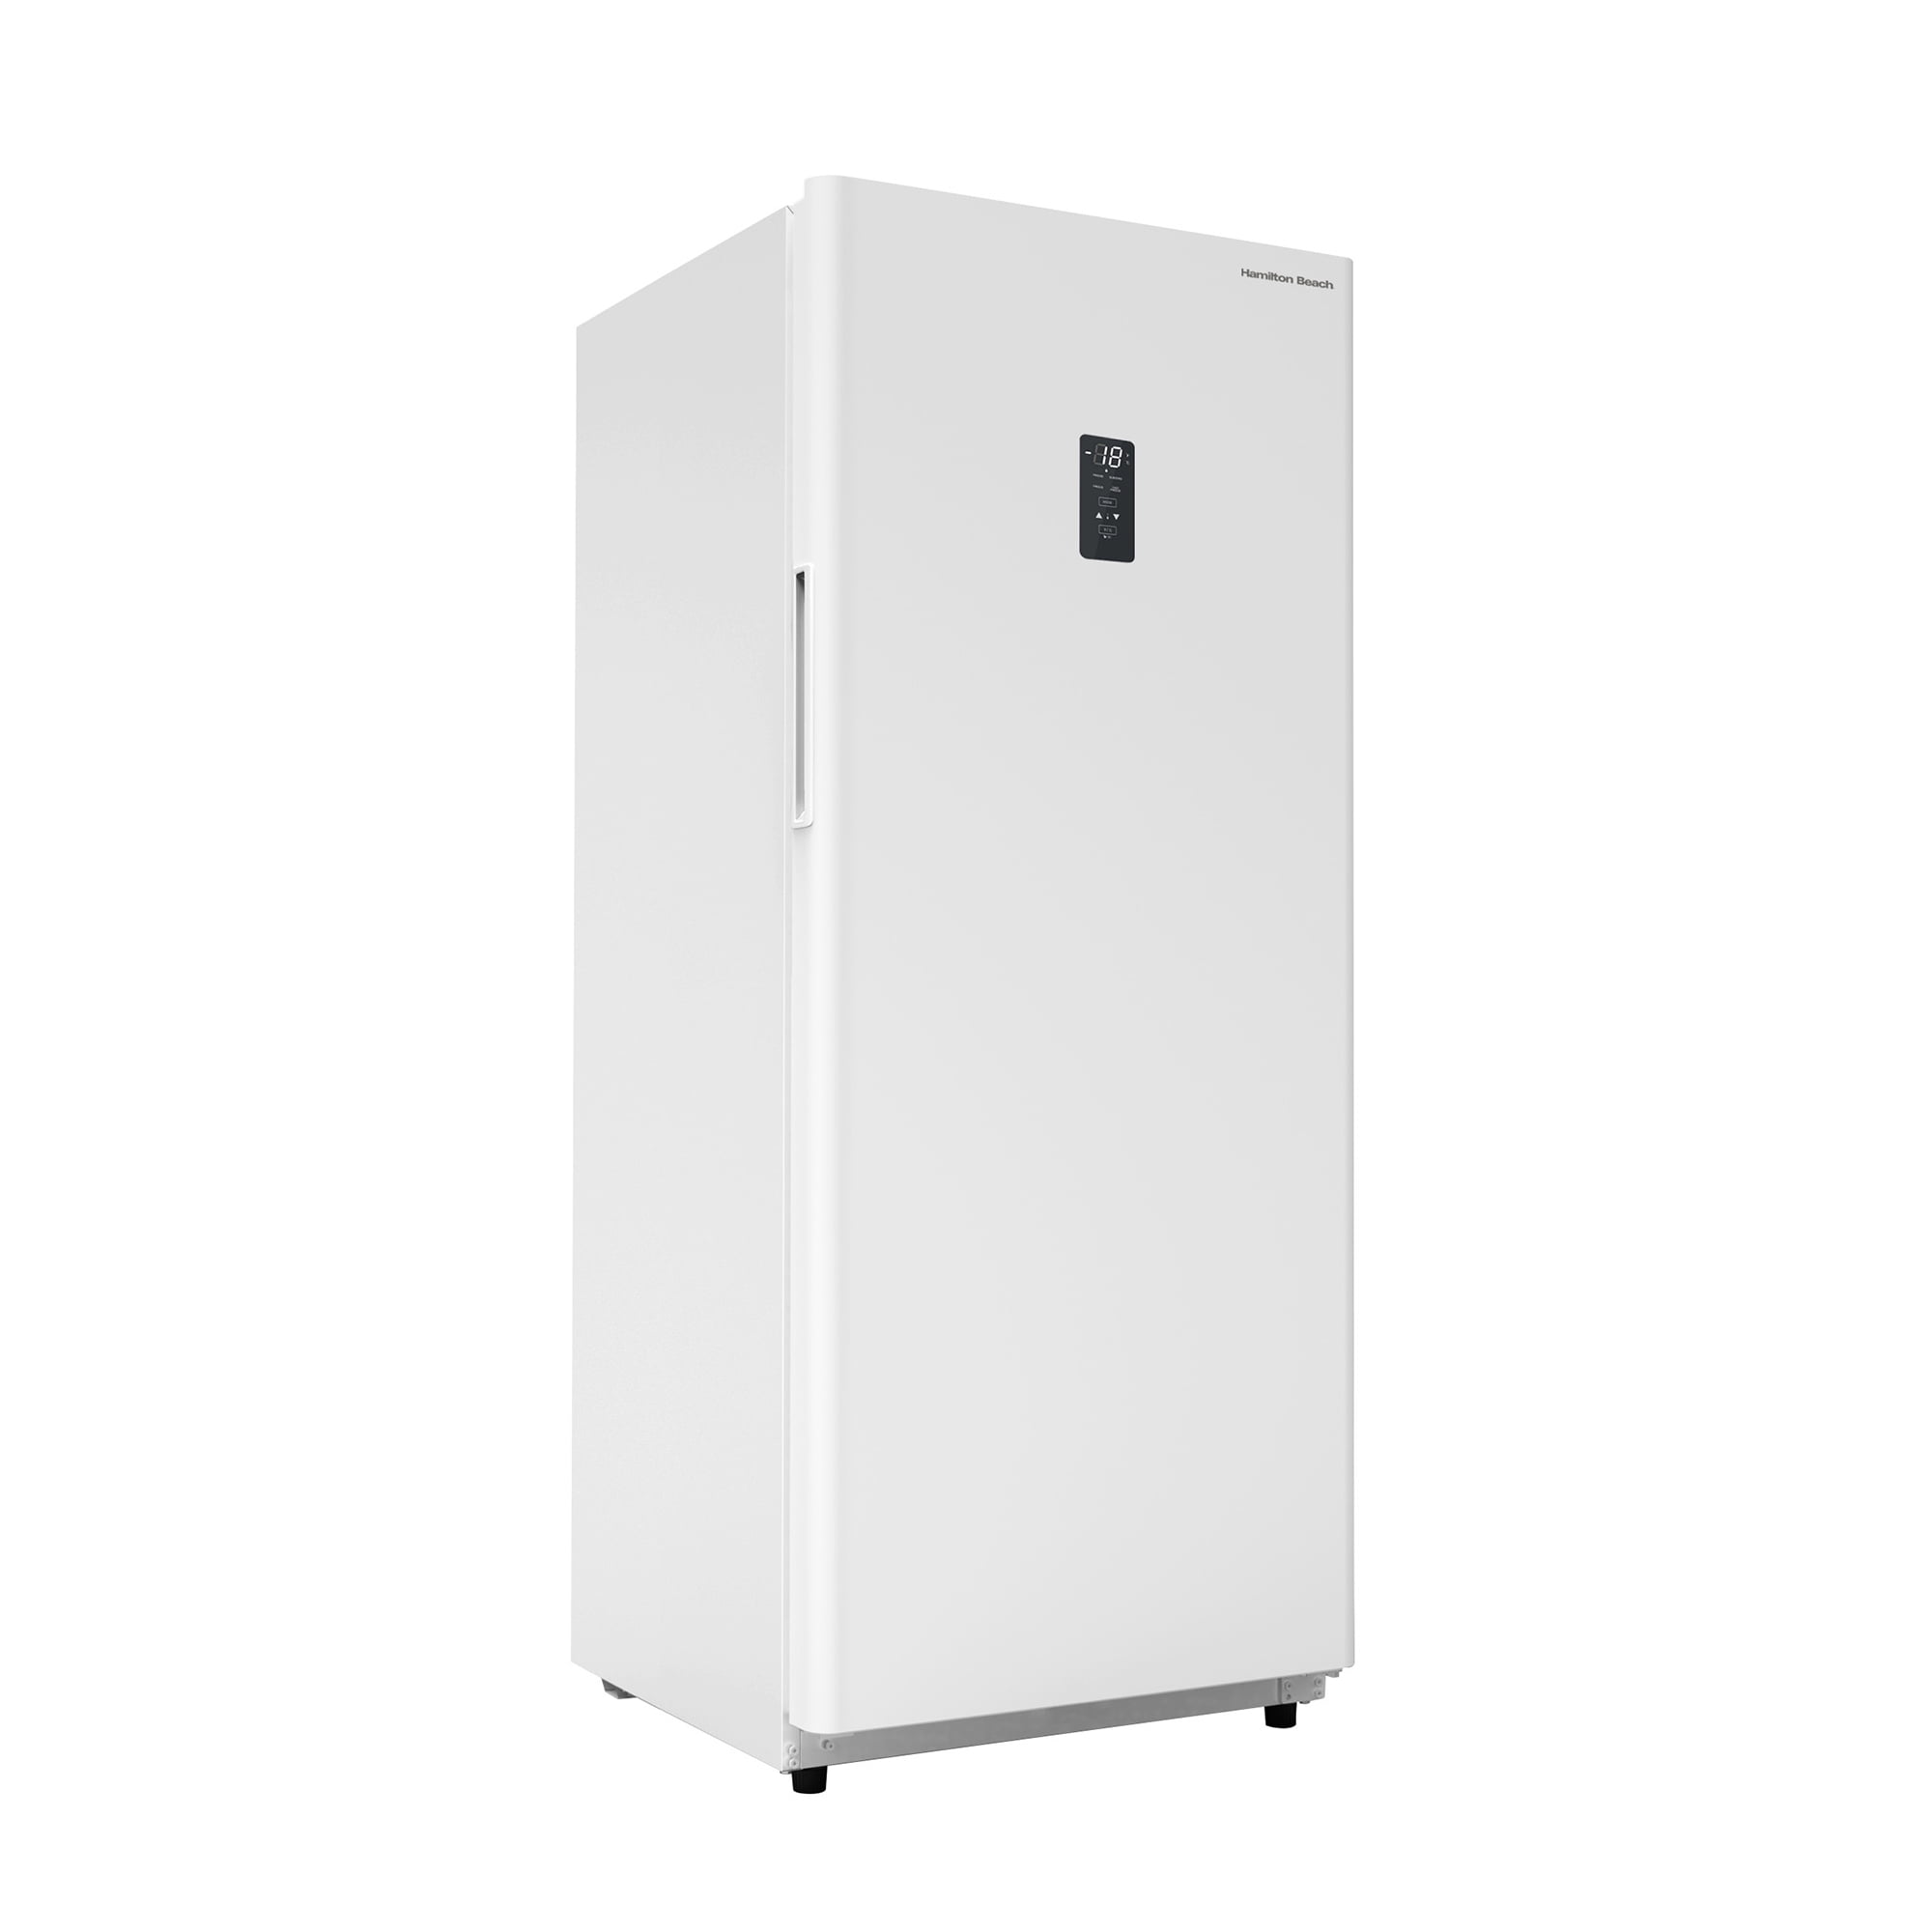 Hamilton Beach,14 Cu. ft. Upright Convertible Freezer and Refrigerator, HBFRF1494, White